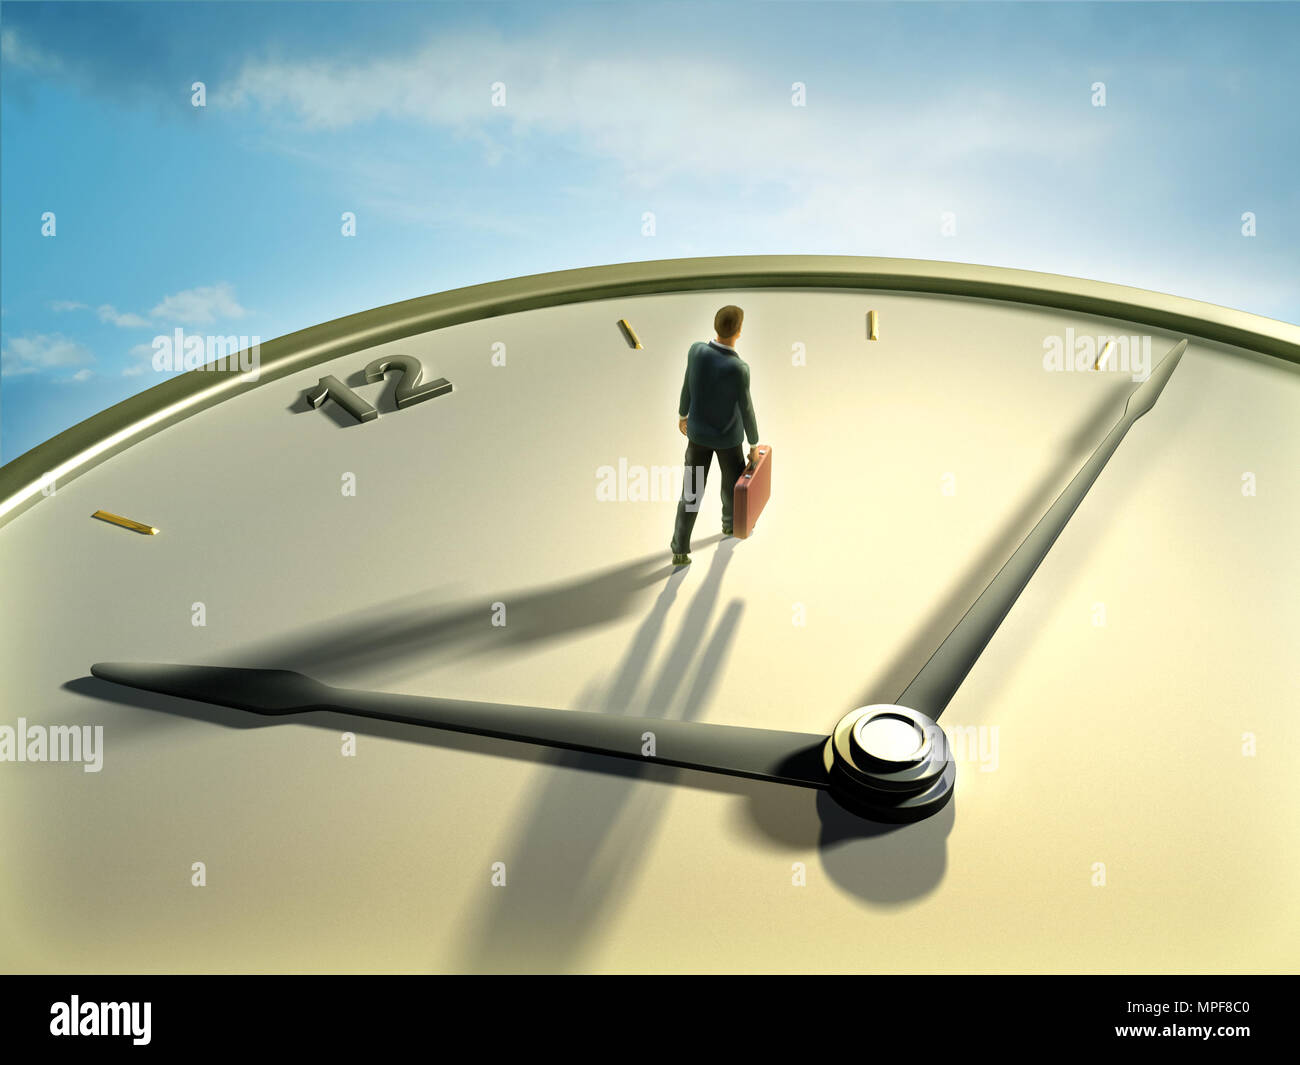 Businessman walking on a clock face. Digital illustration. Stock Photo